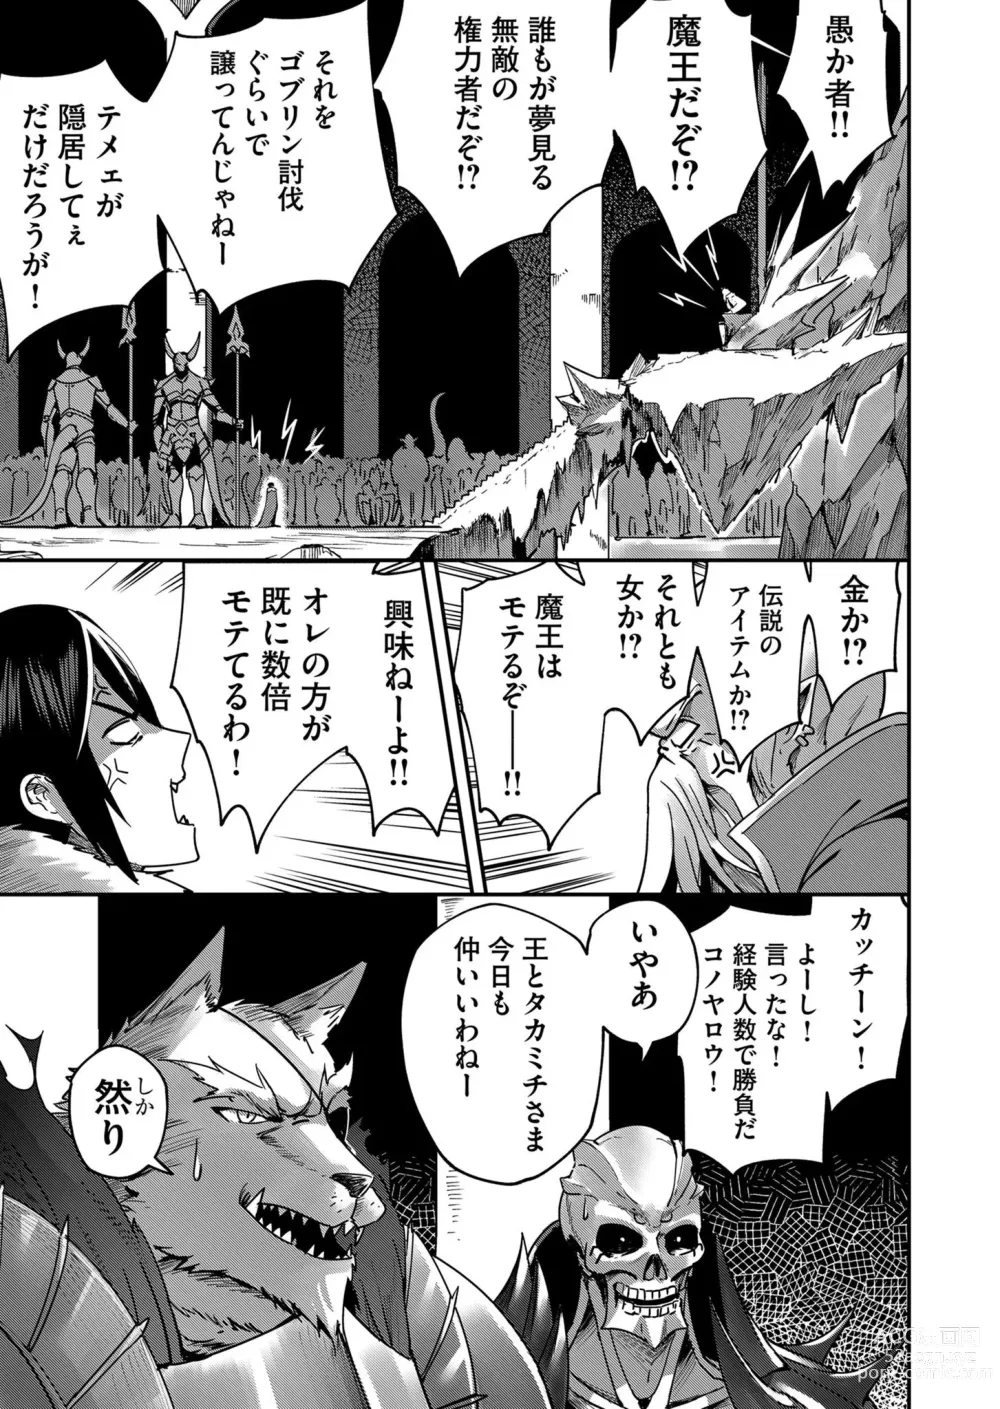 Page 13 of manga Kichiku Eiyuu Vol.01